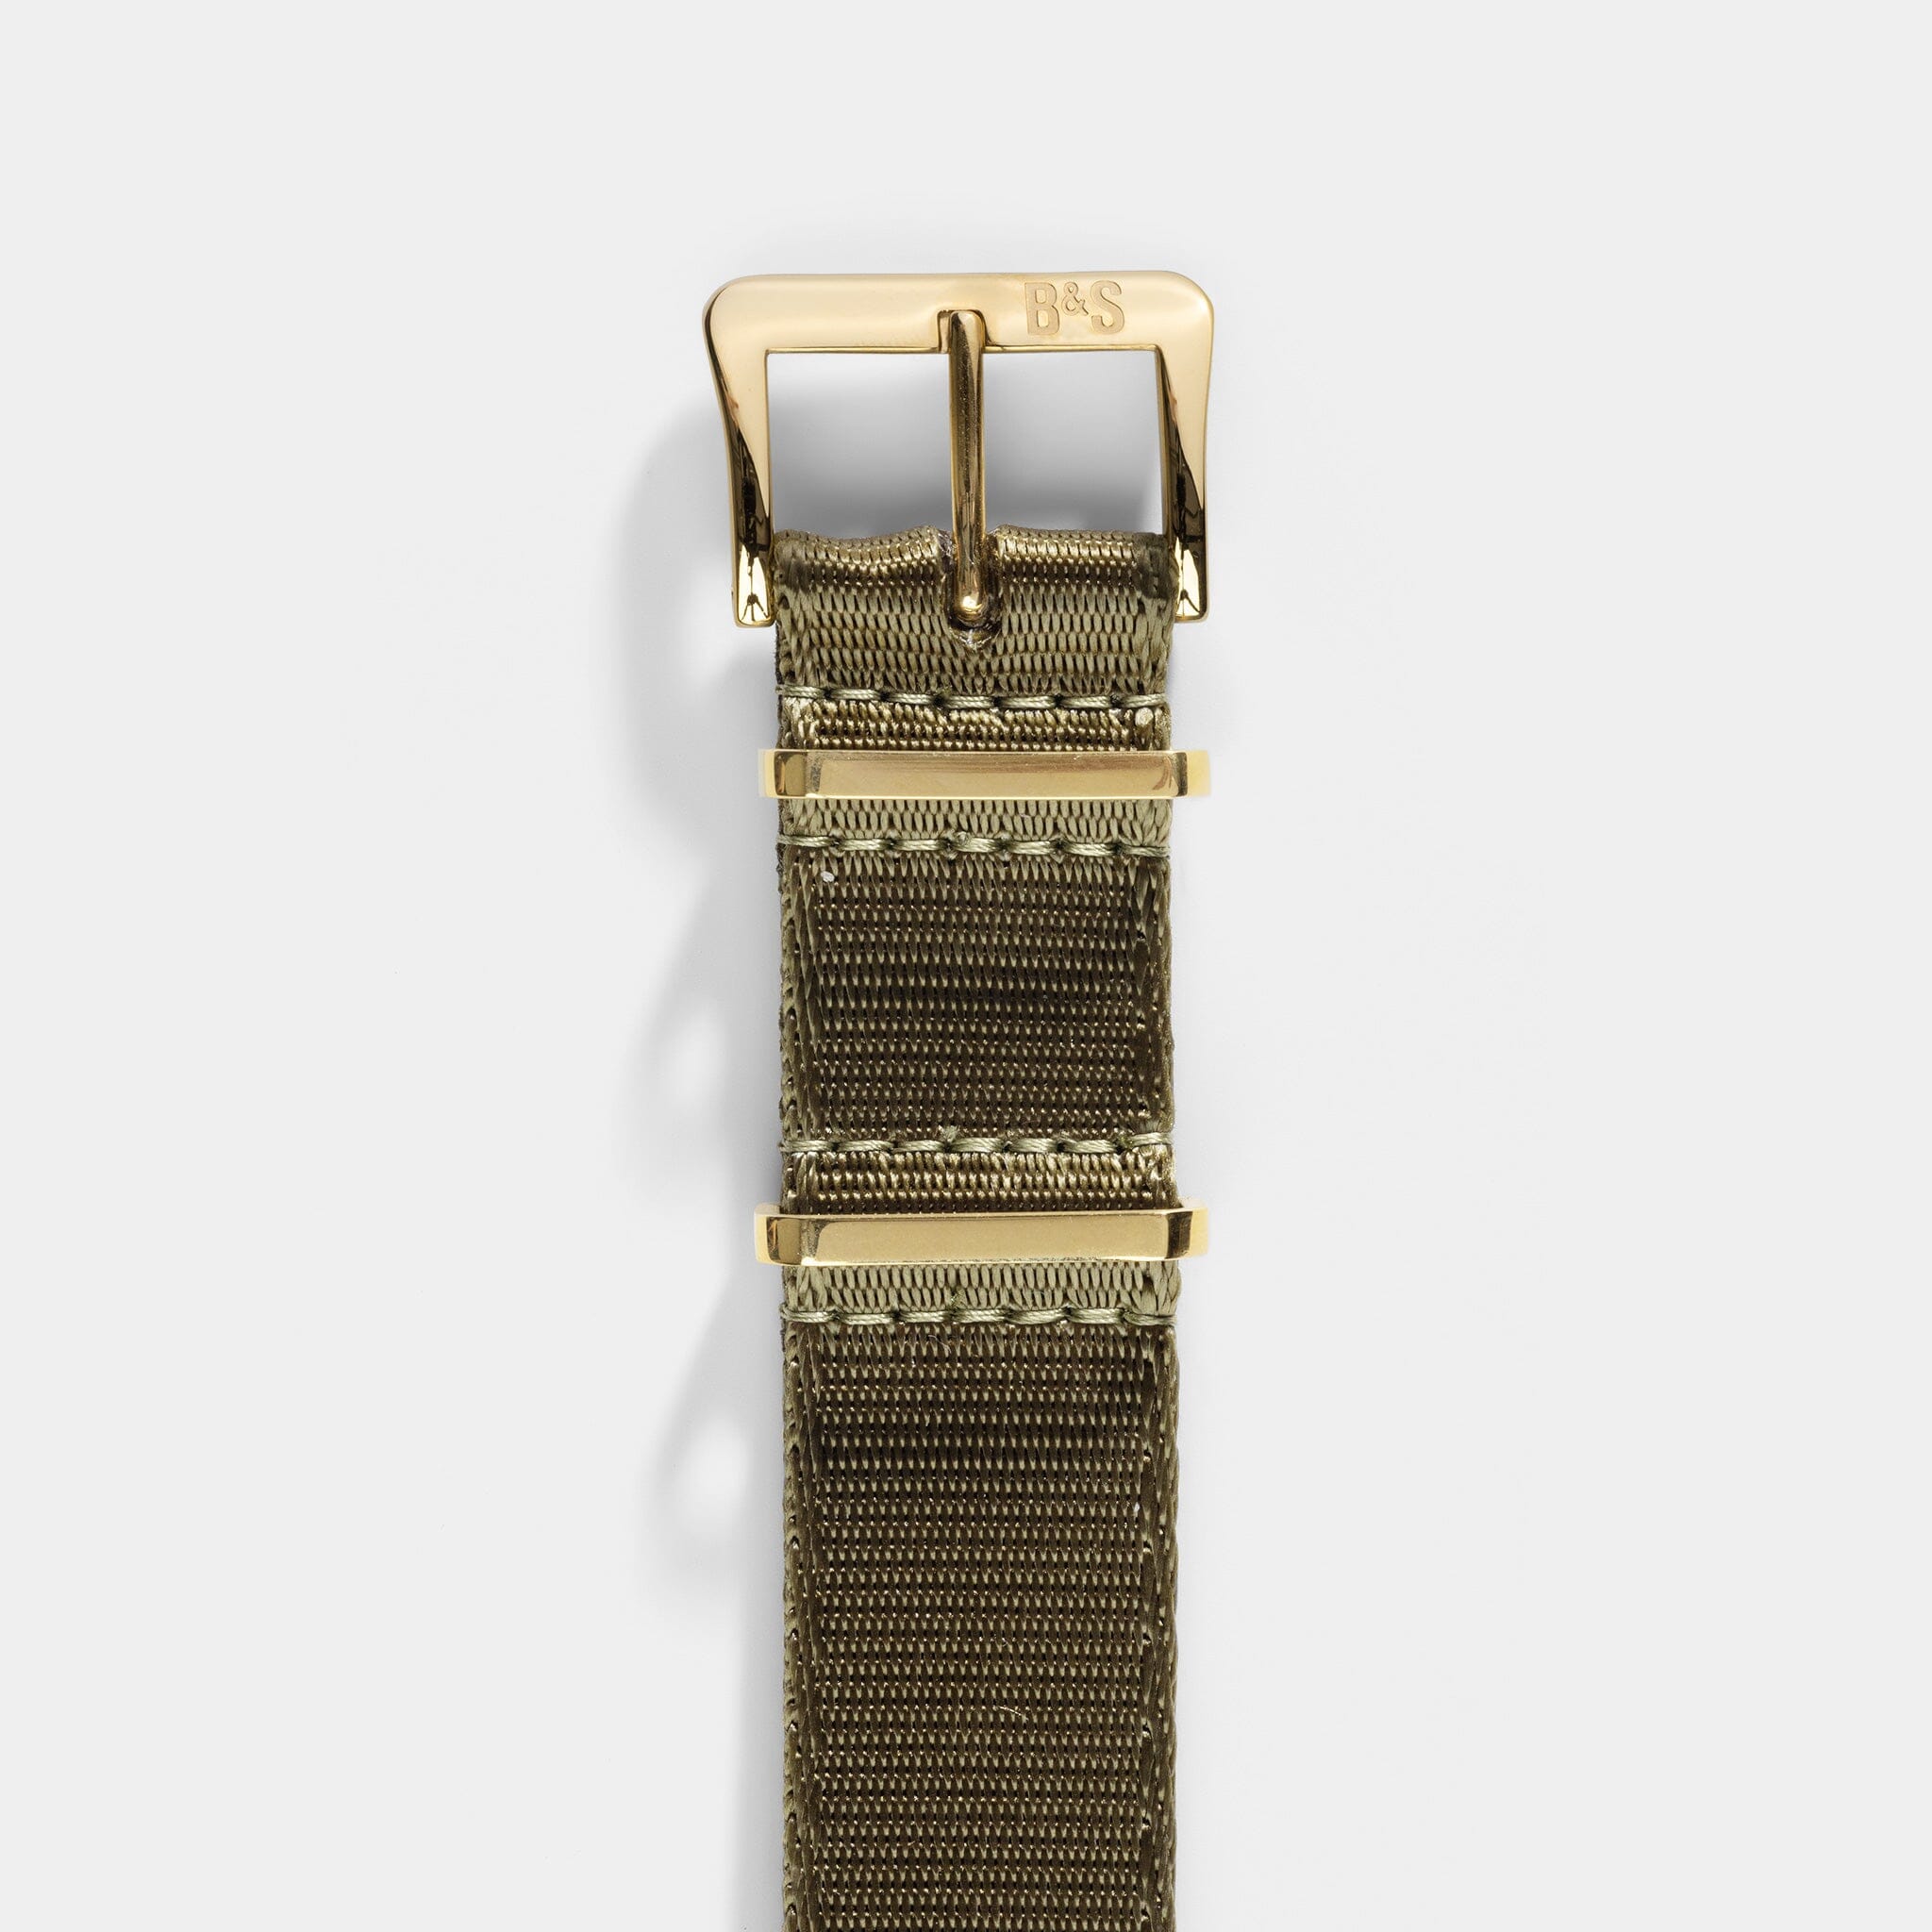 Deluxe Nylon Nato Horlogeband Olive Drab Green - Goud